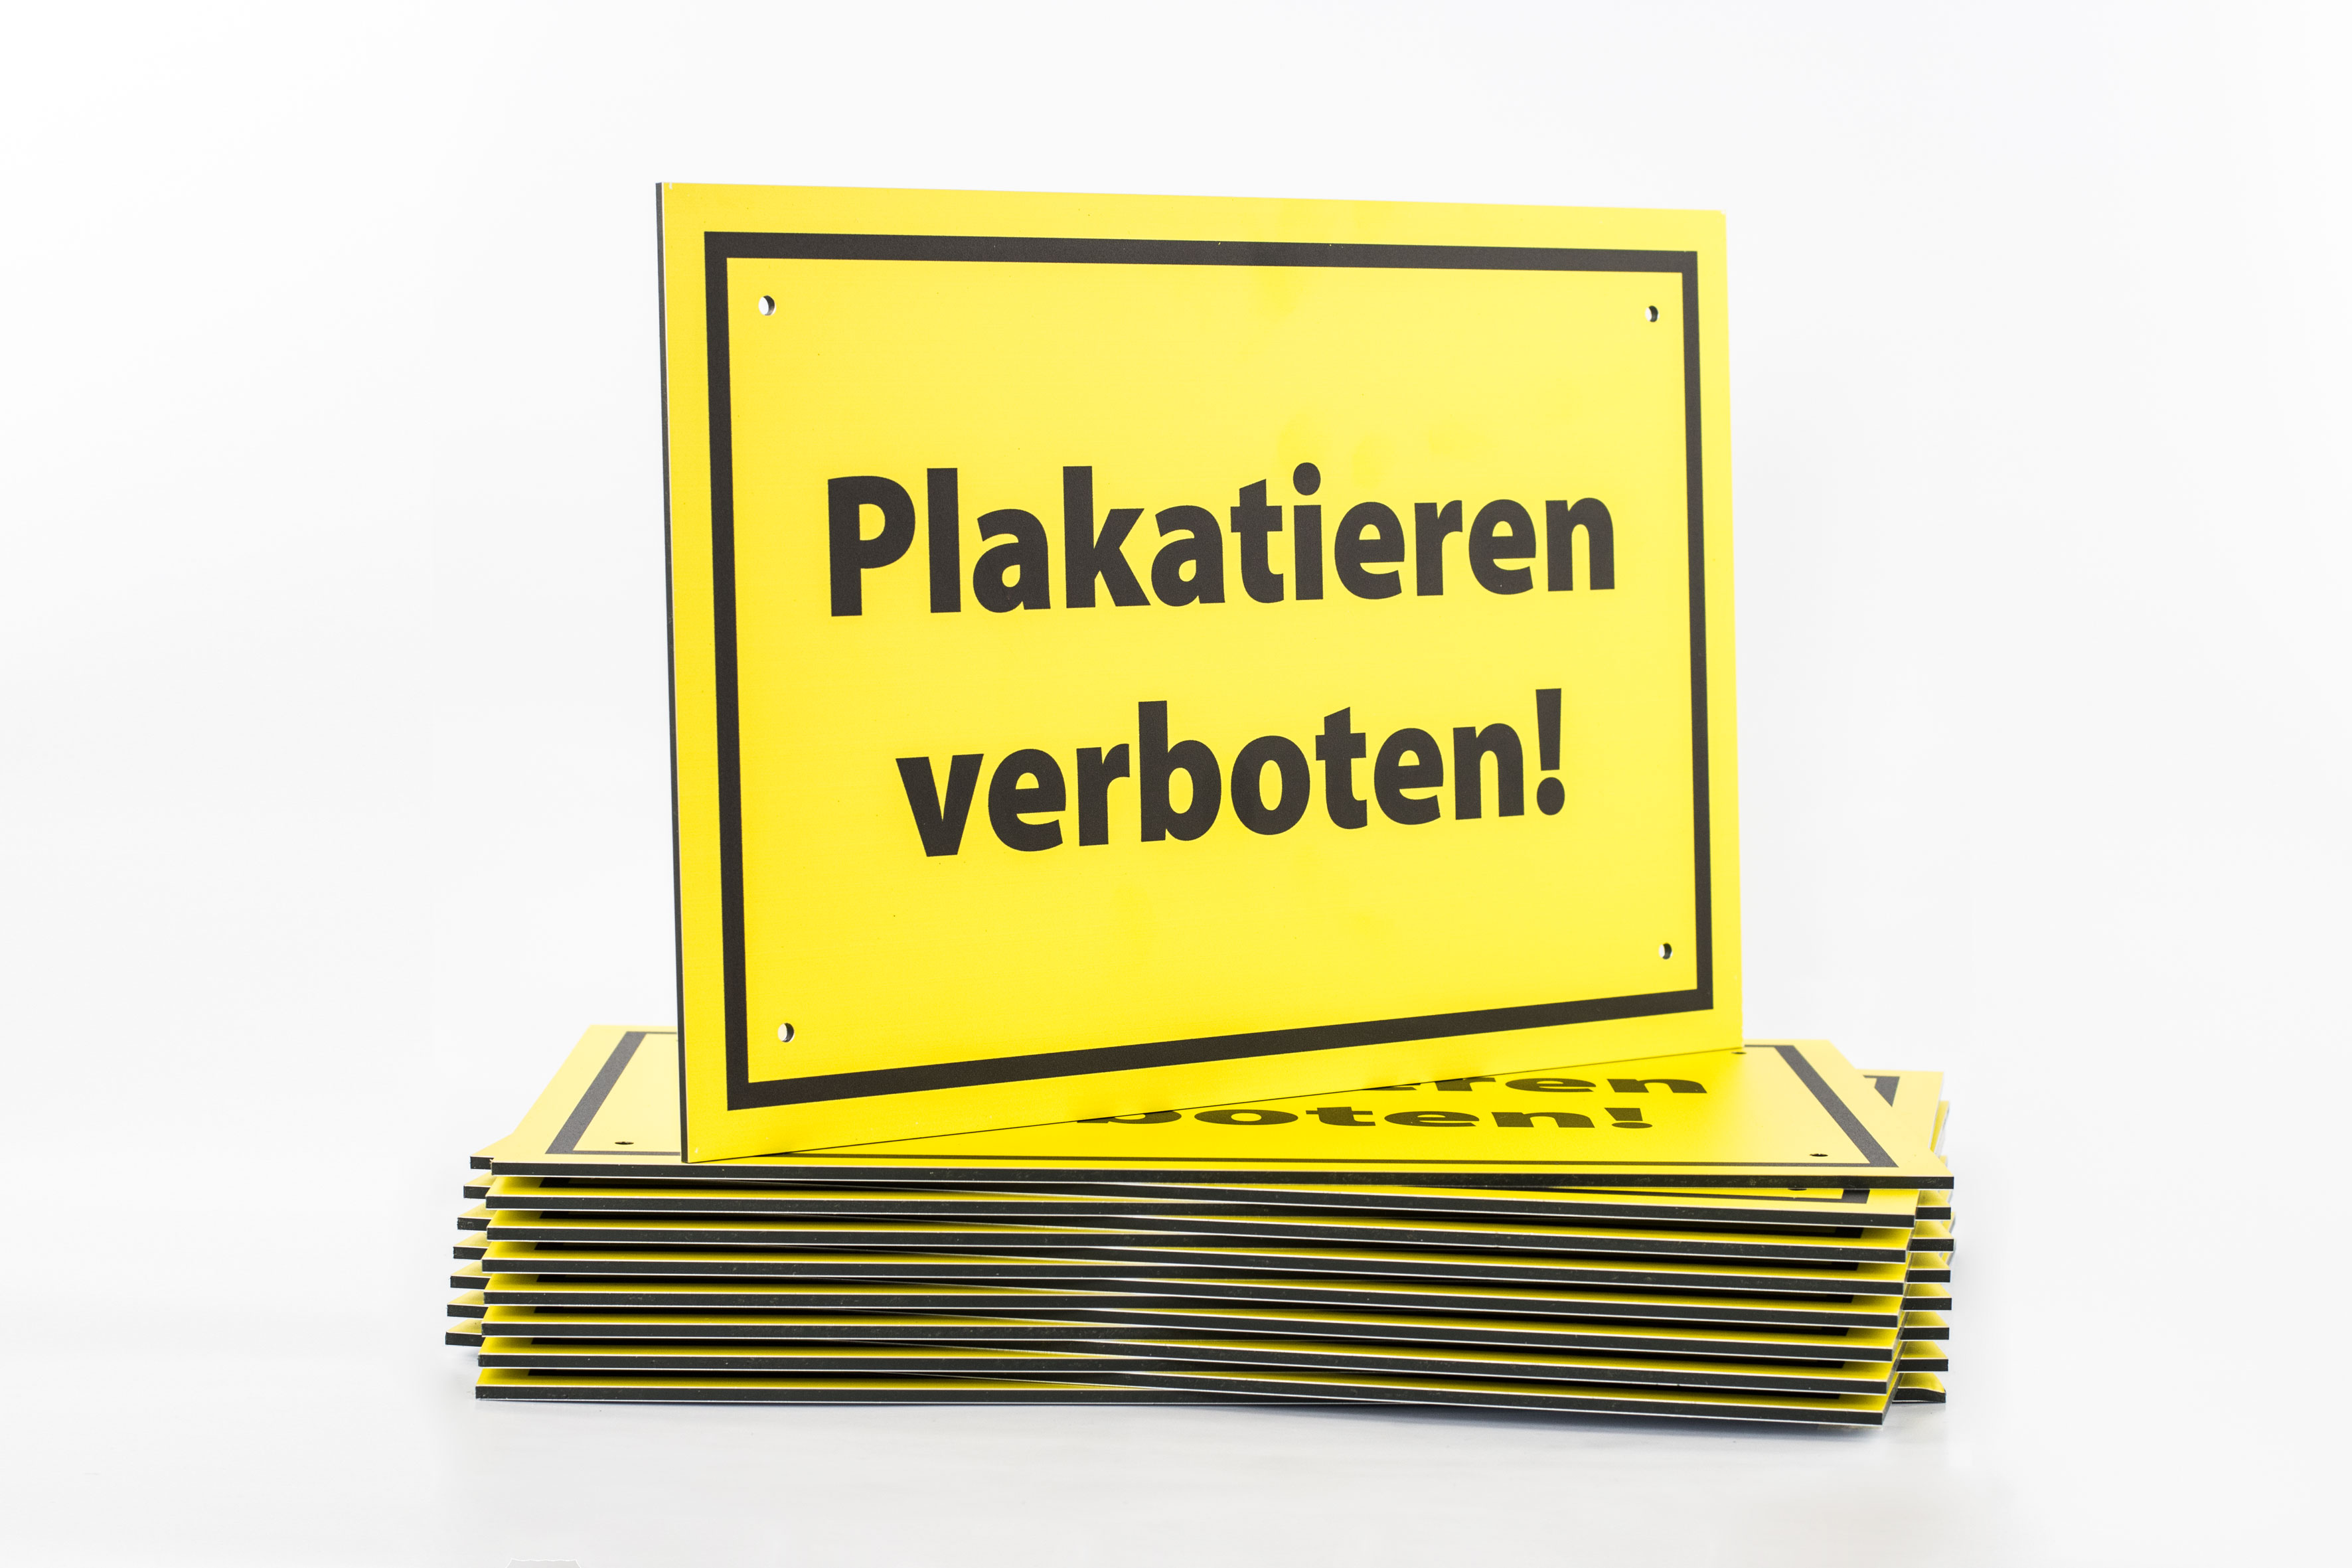 Plakatieren verboten! gelb Warnschild Verbotsschild Plakate anbringen verboten